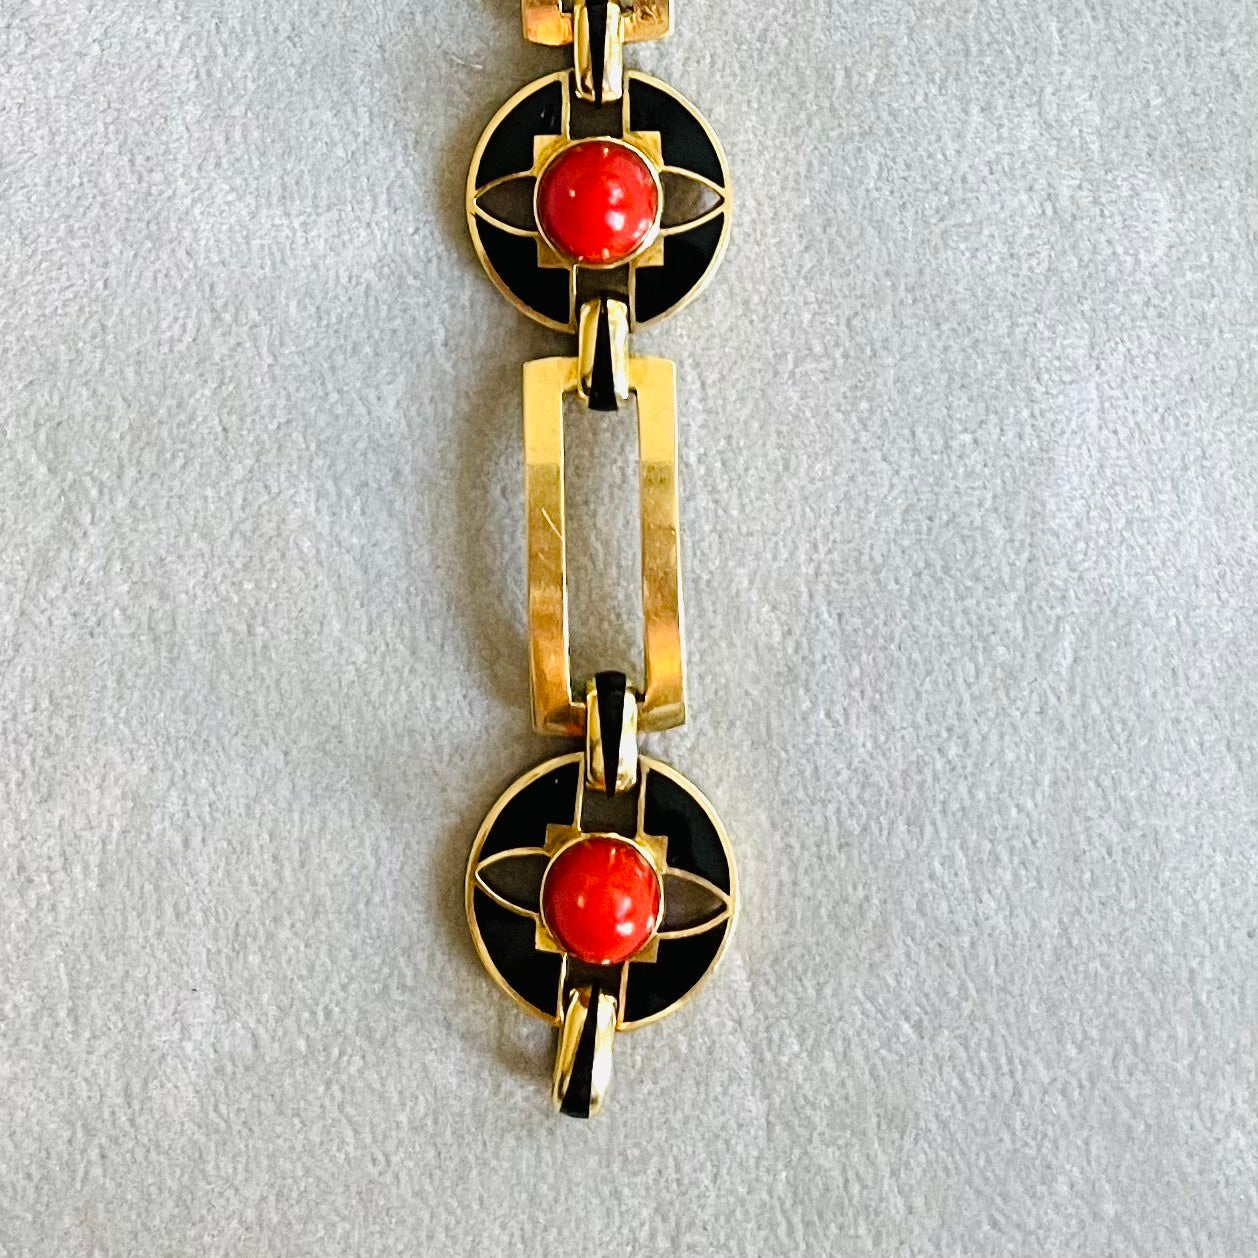 French Art Deco 18KT Yellow Gold Coral & Enamel Bracelet close-up details